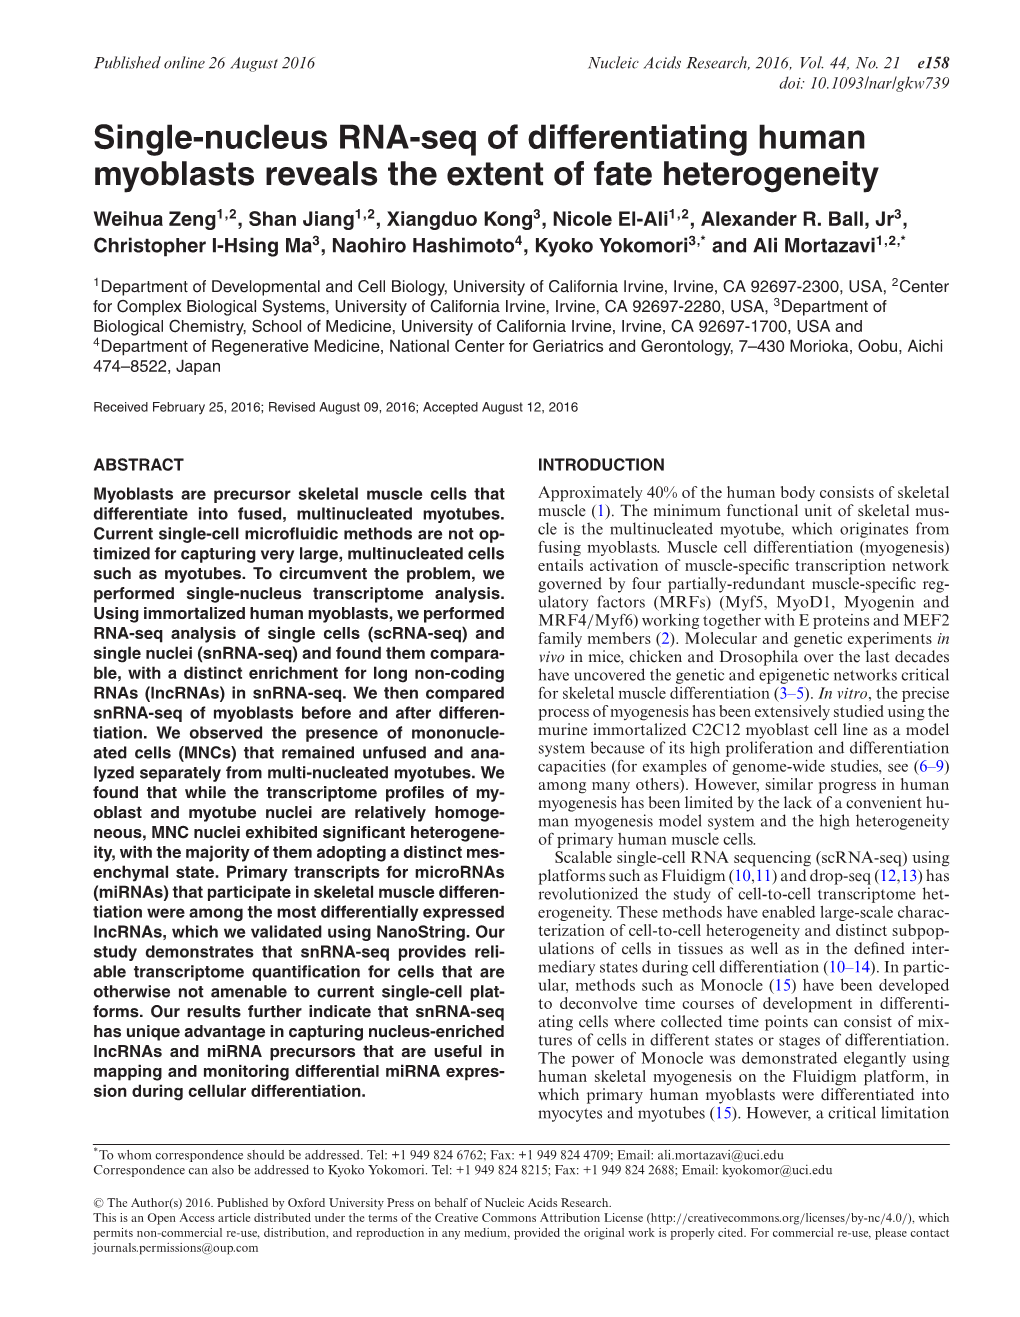 Single-Nucleus RNA-Seq of Differentiating Human Myoblasts Reveals the Extent of Fate Heterogeneity